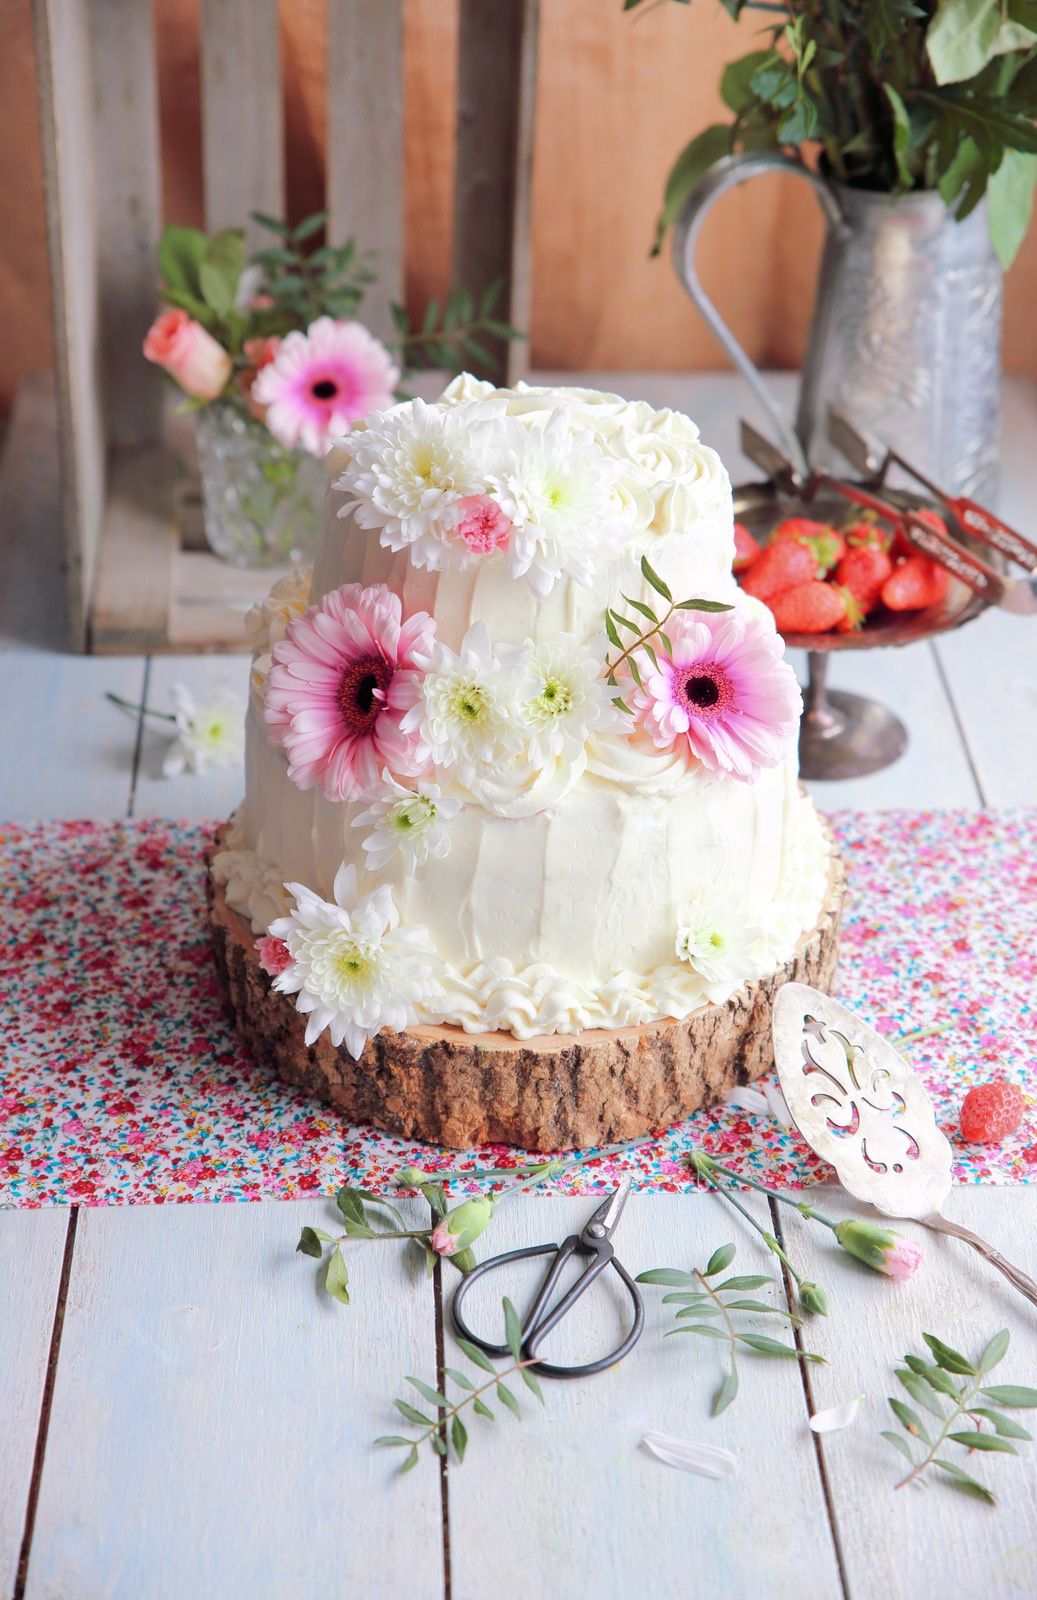 Petit Wedding Cake de printemps 